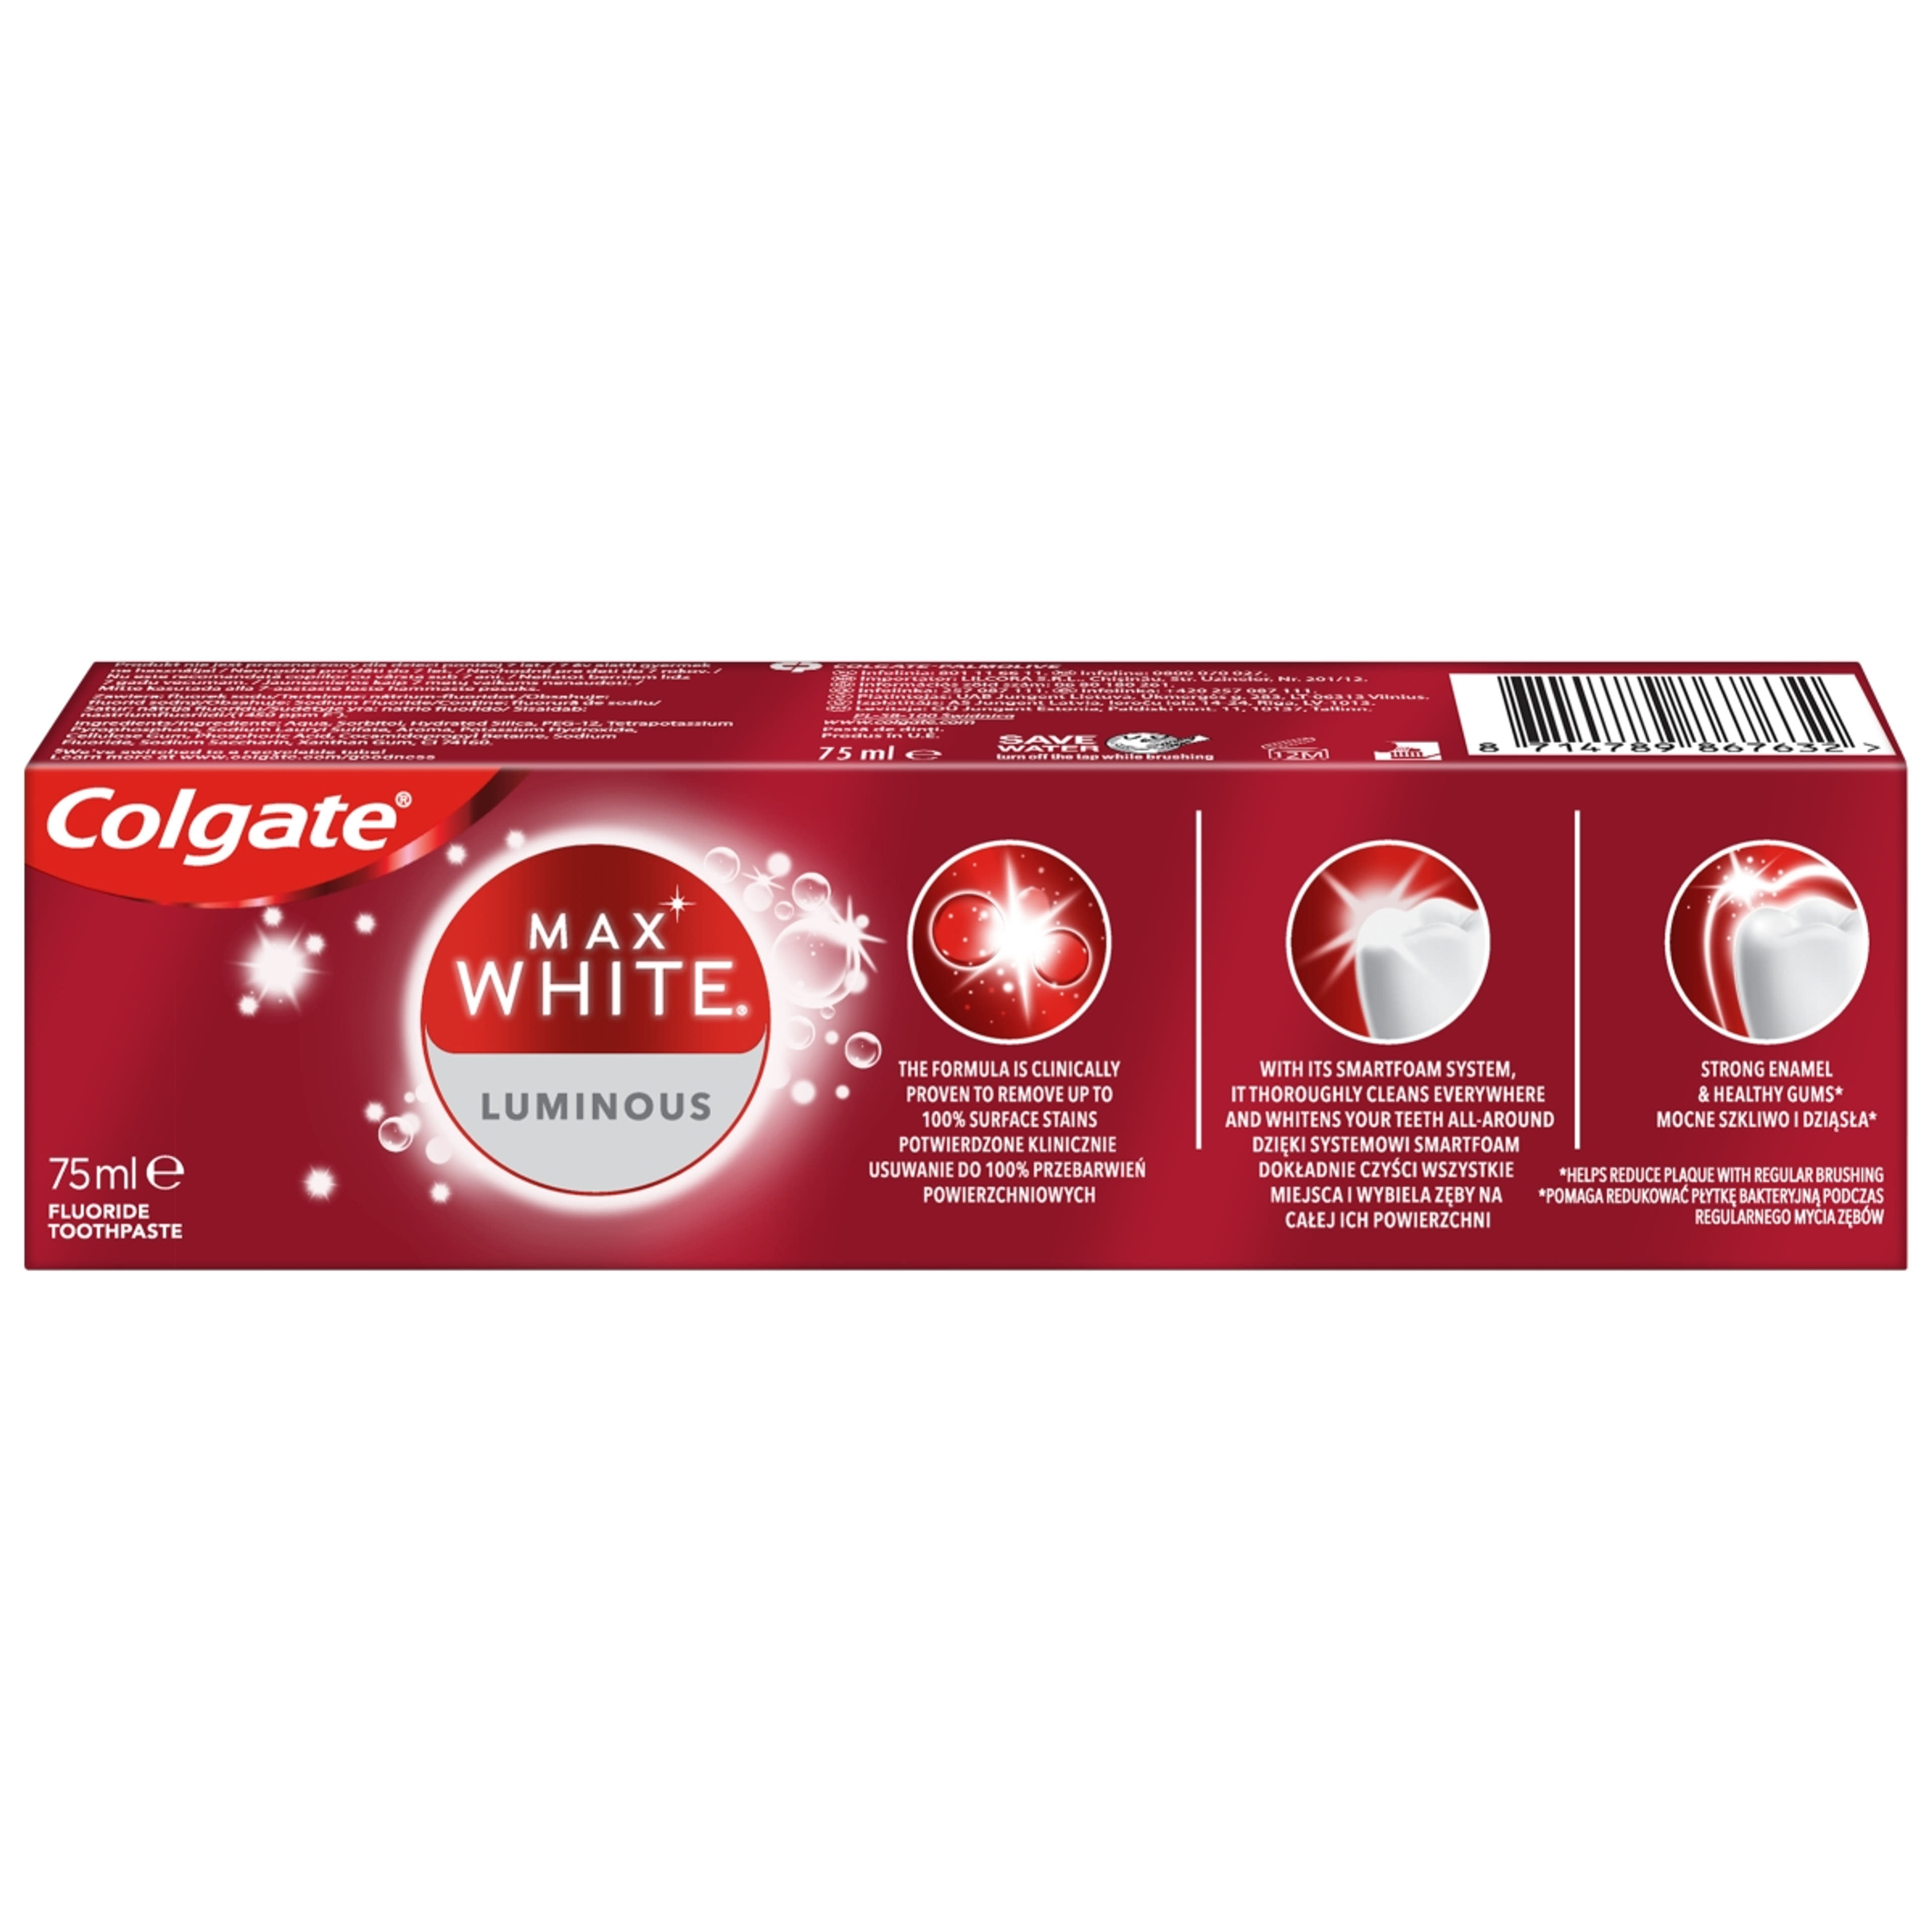 Colgate Max White One Luminous fogfehérítő fogkrém - 75 ml-3